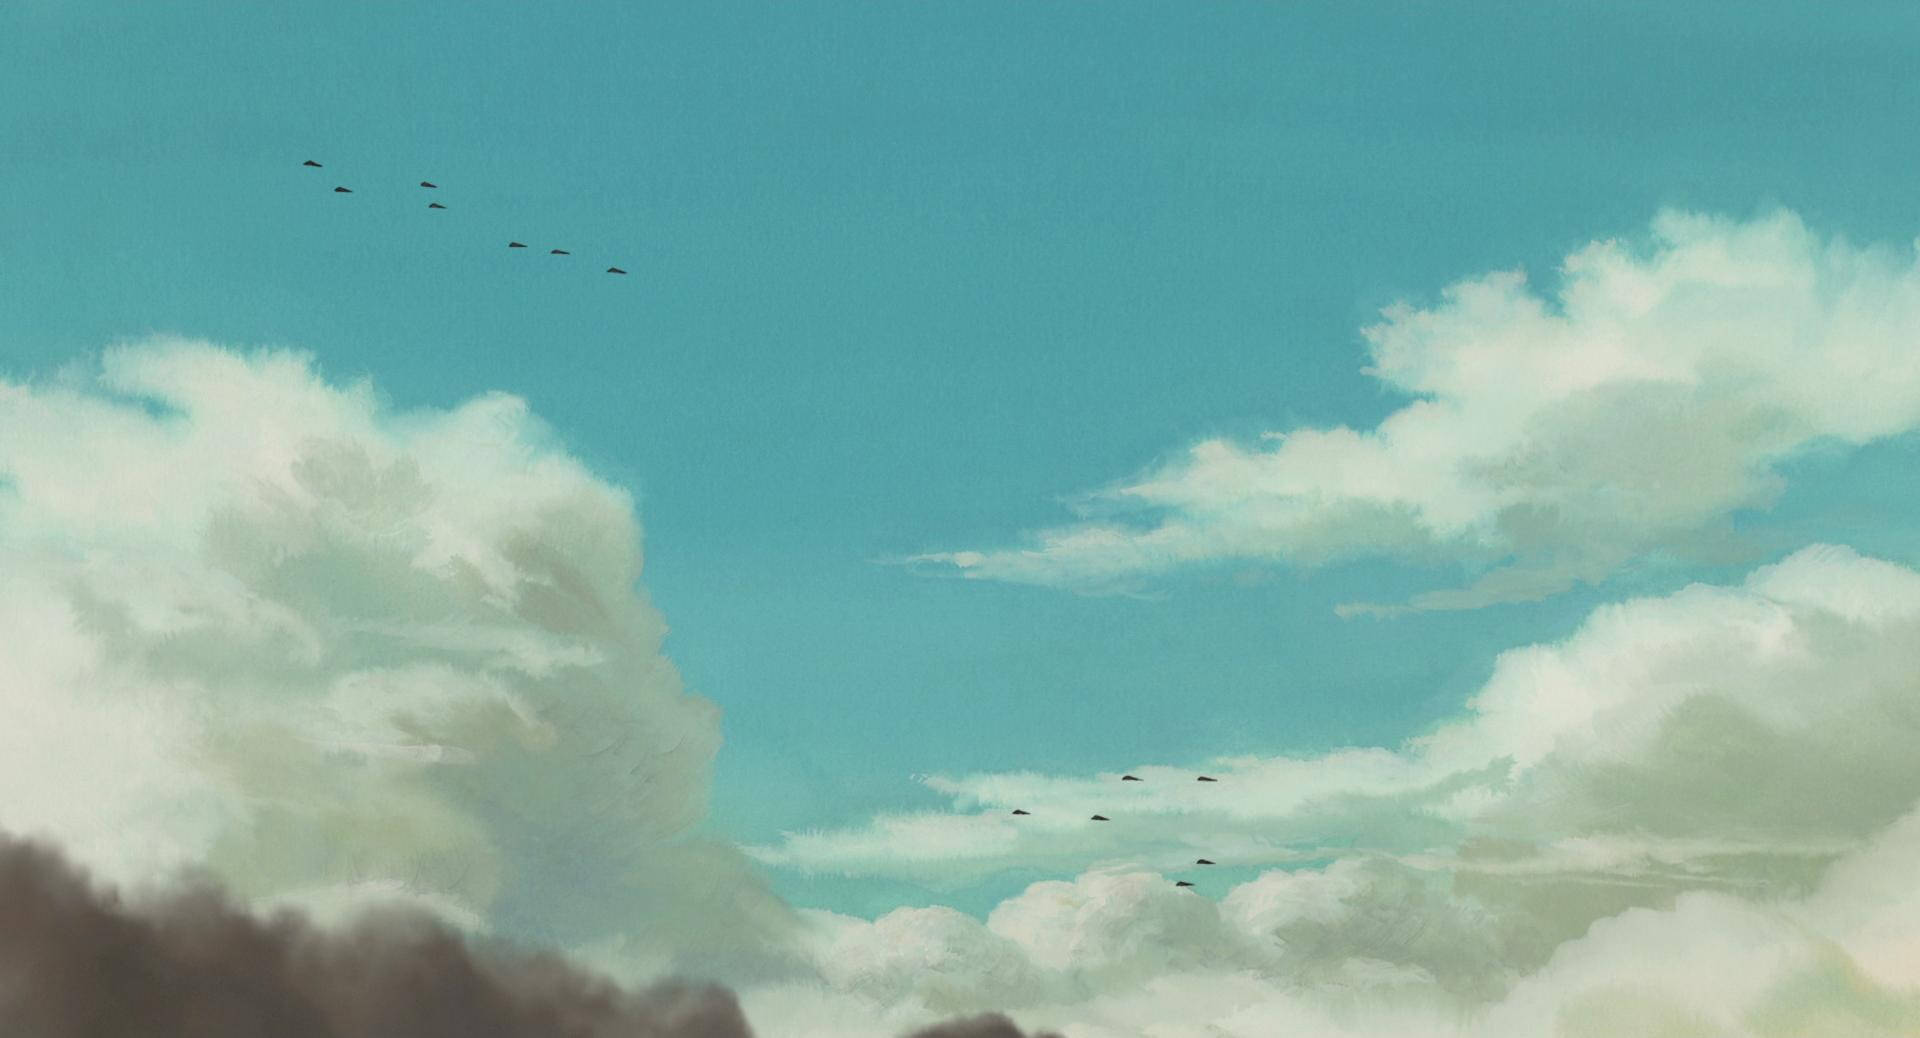 Studio Ghibli Scenery Blue Sky With Planes Background